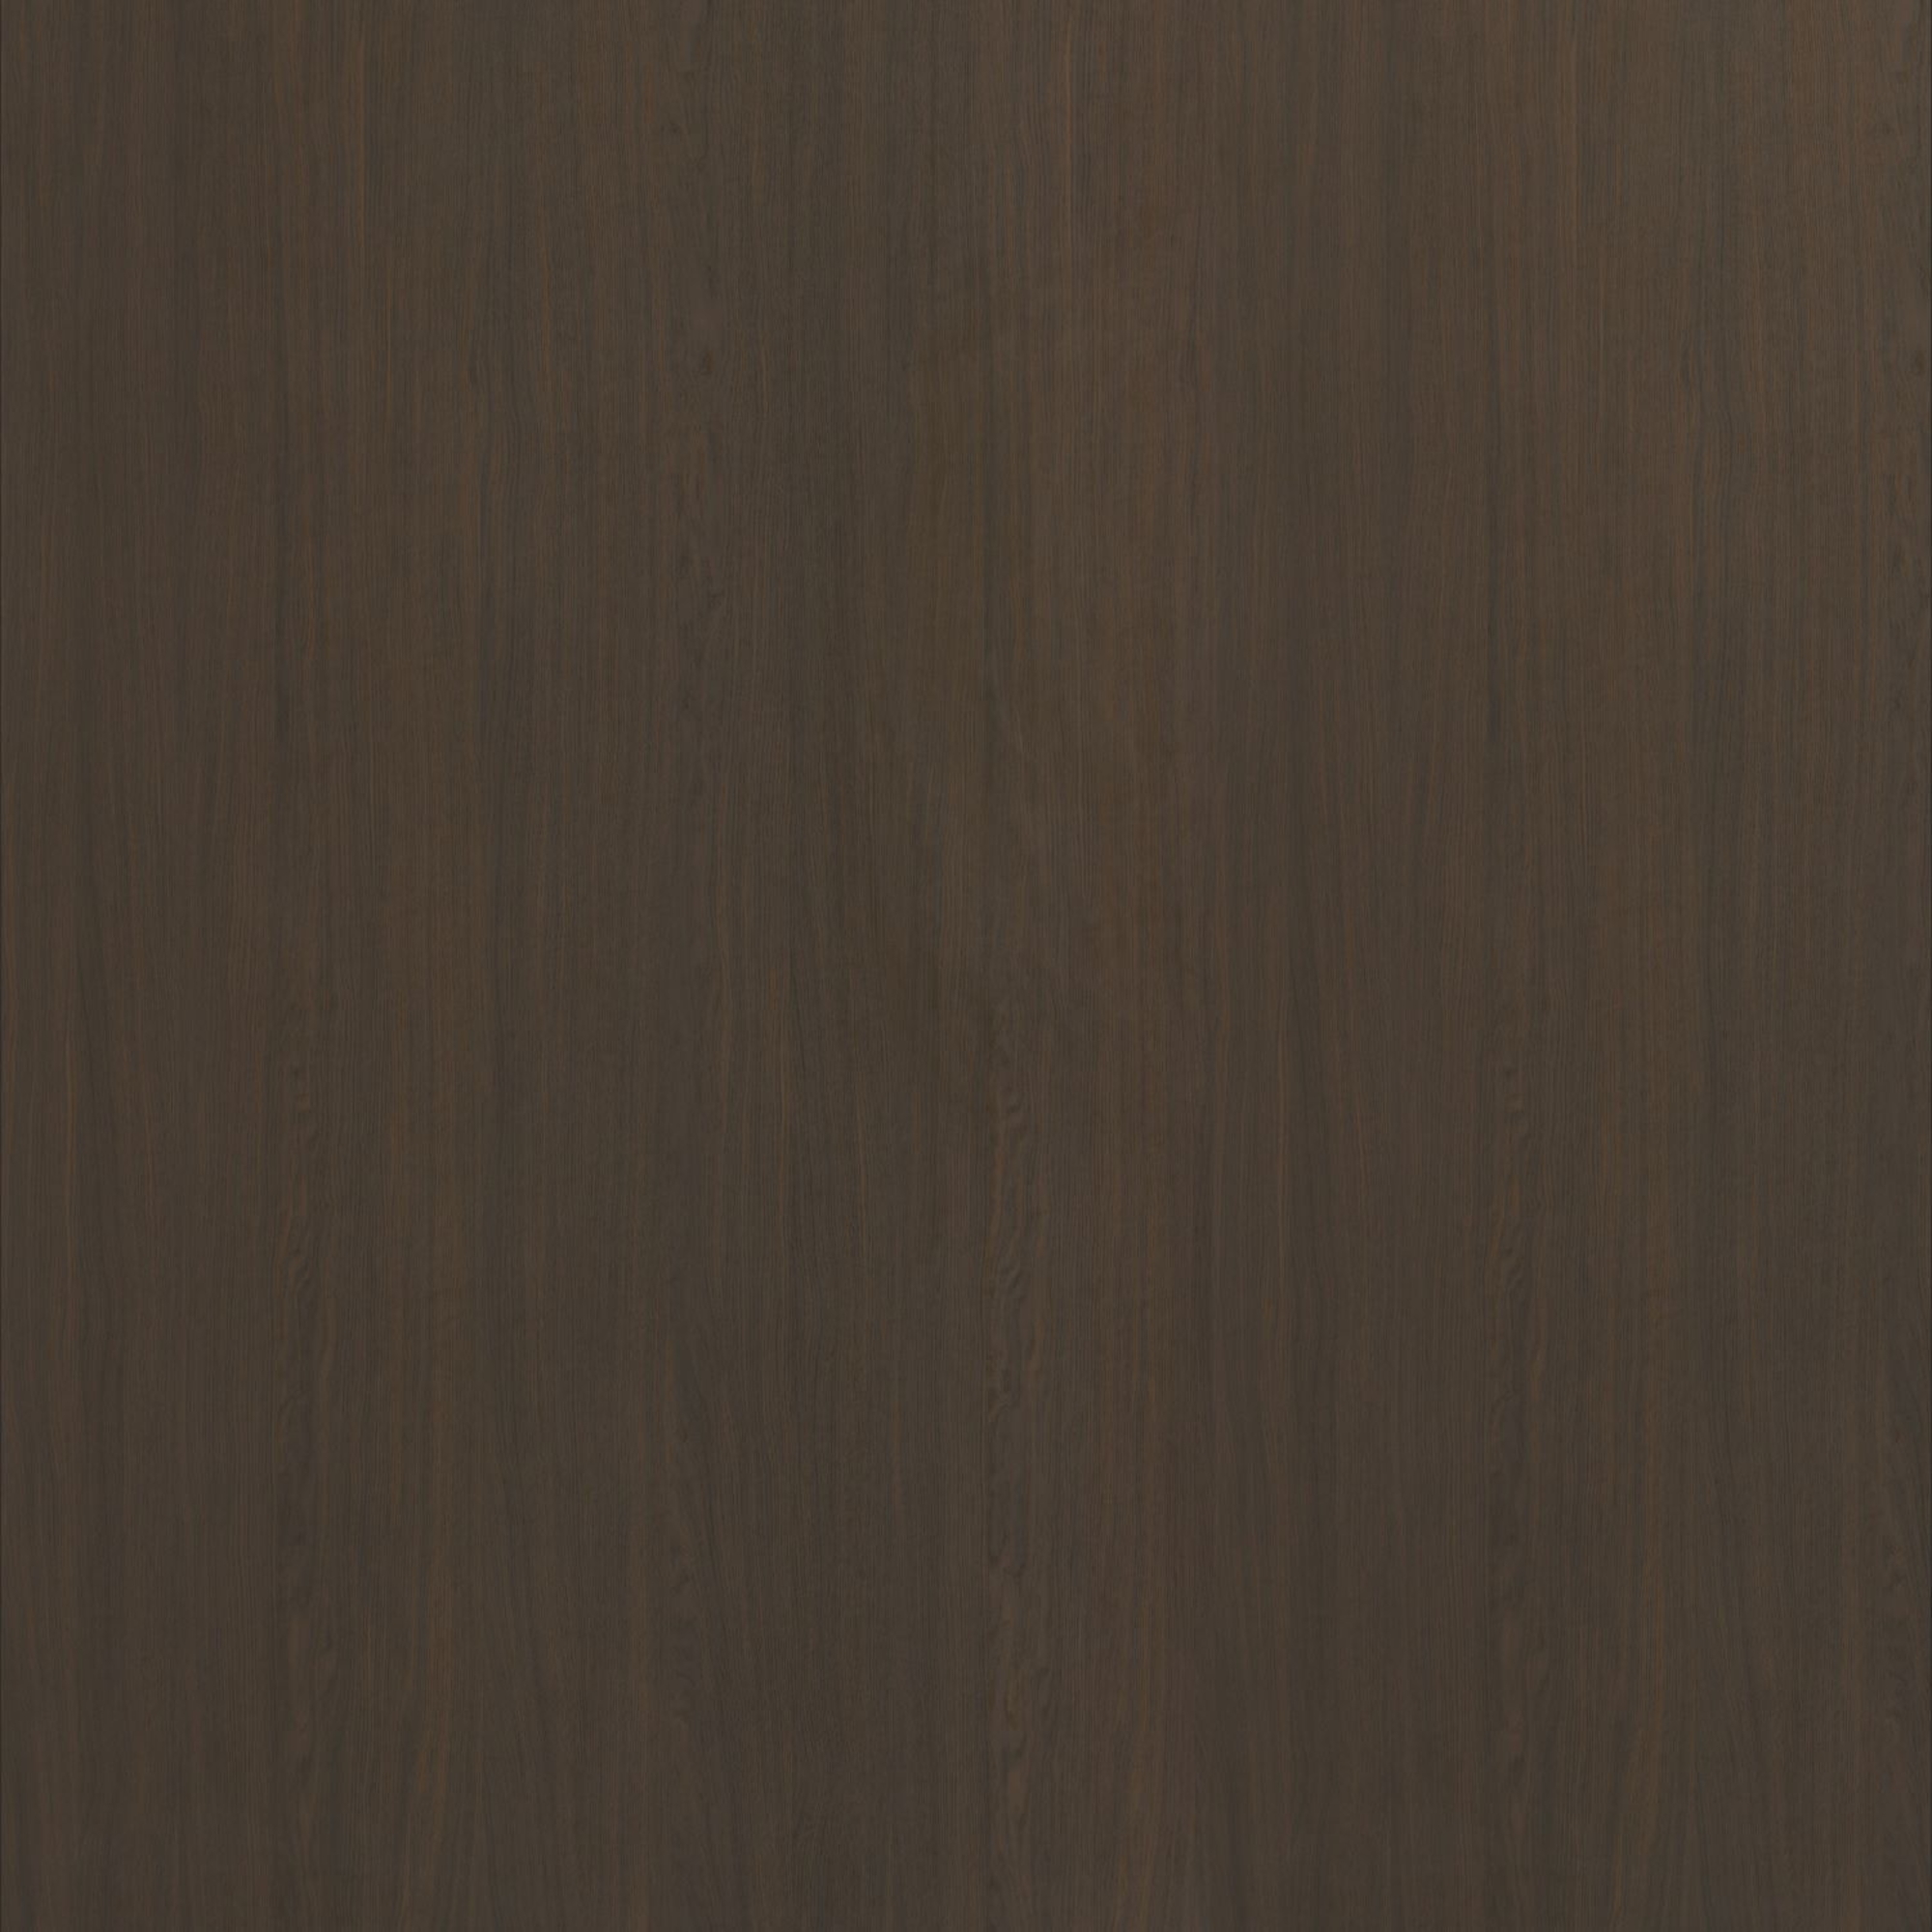 0H912 Brown V2A Master Oak UNILIN TFL panel swatch